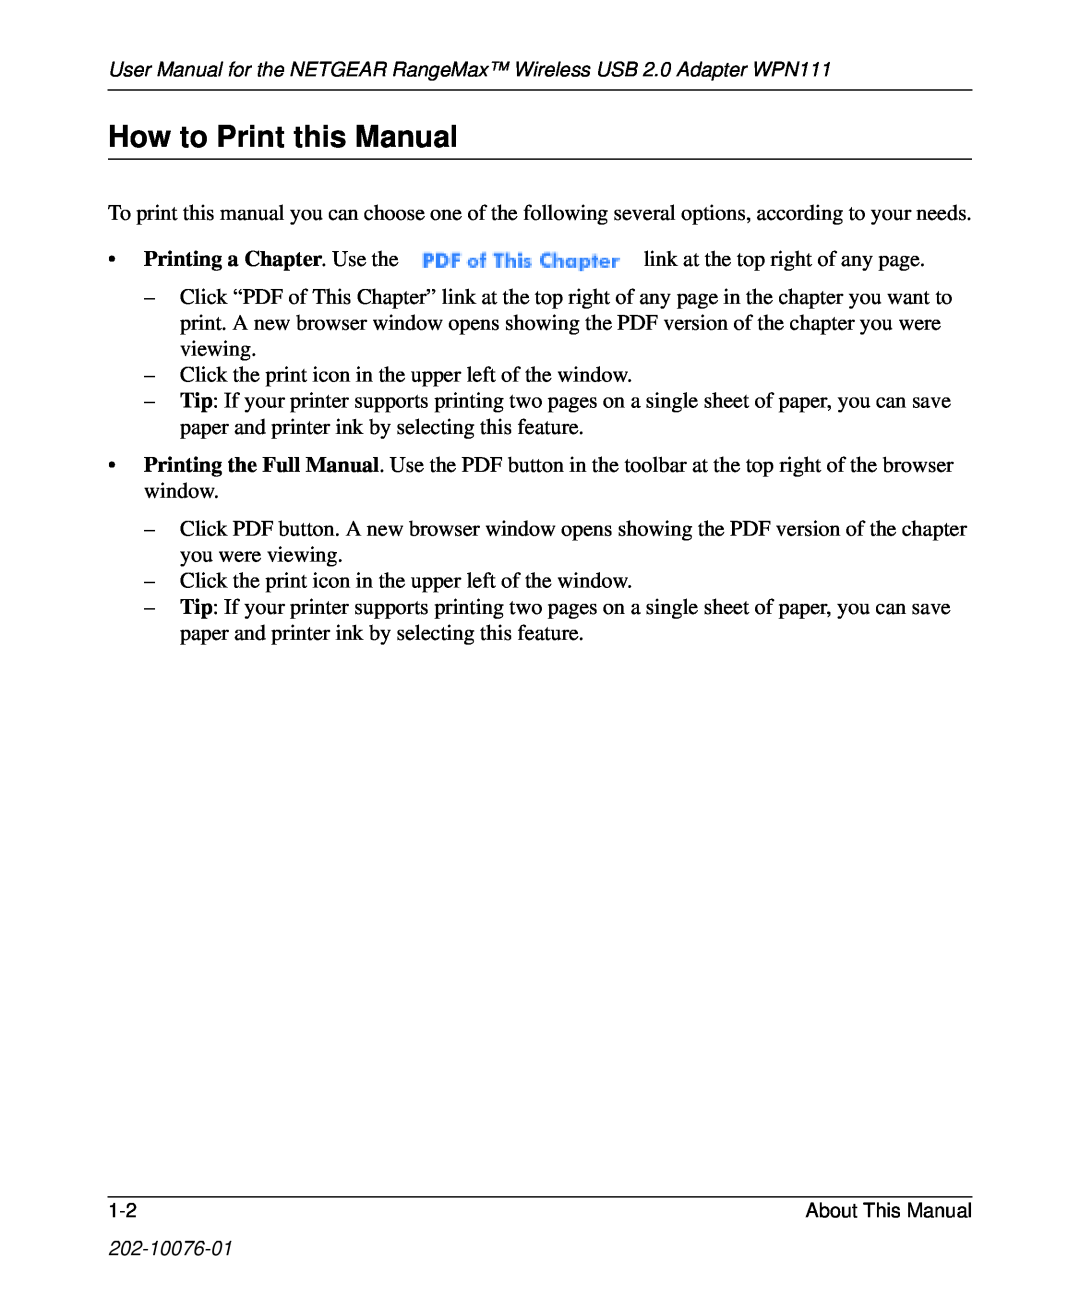 NETGEAR WPN111 user manual How to Print this Manual, A b ou t T h is M a n u a l 